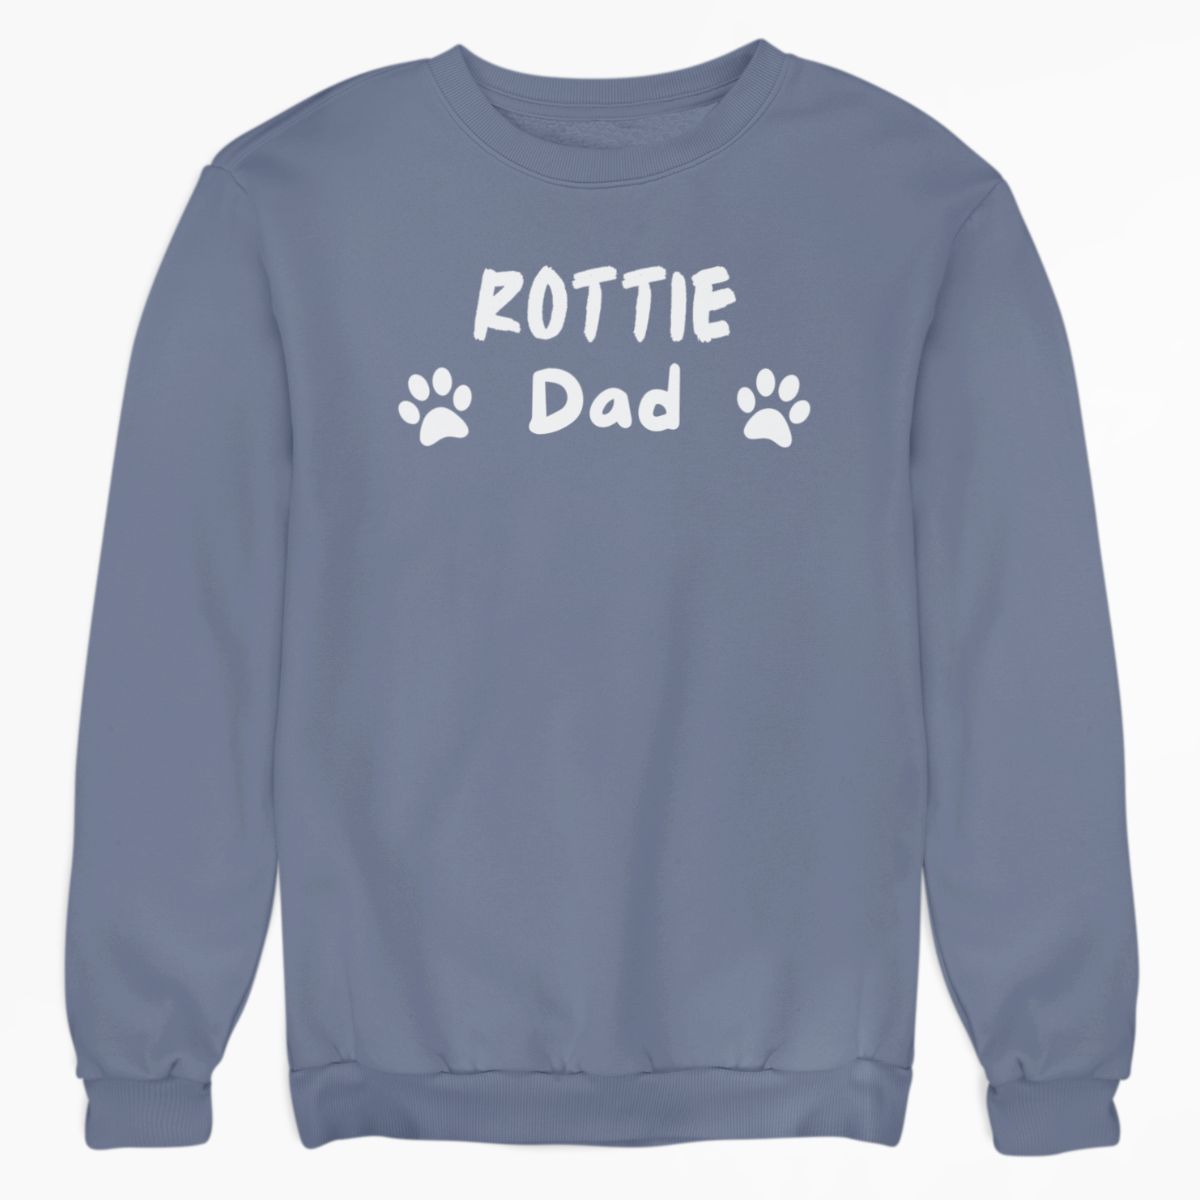 Rottie Dad Shirt